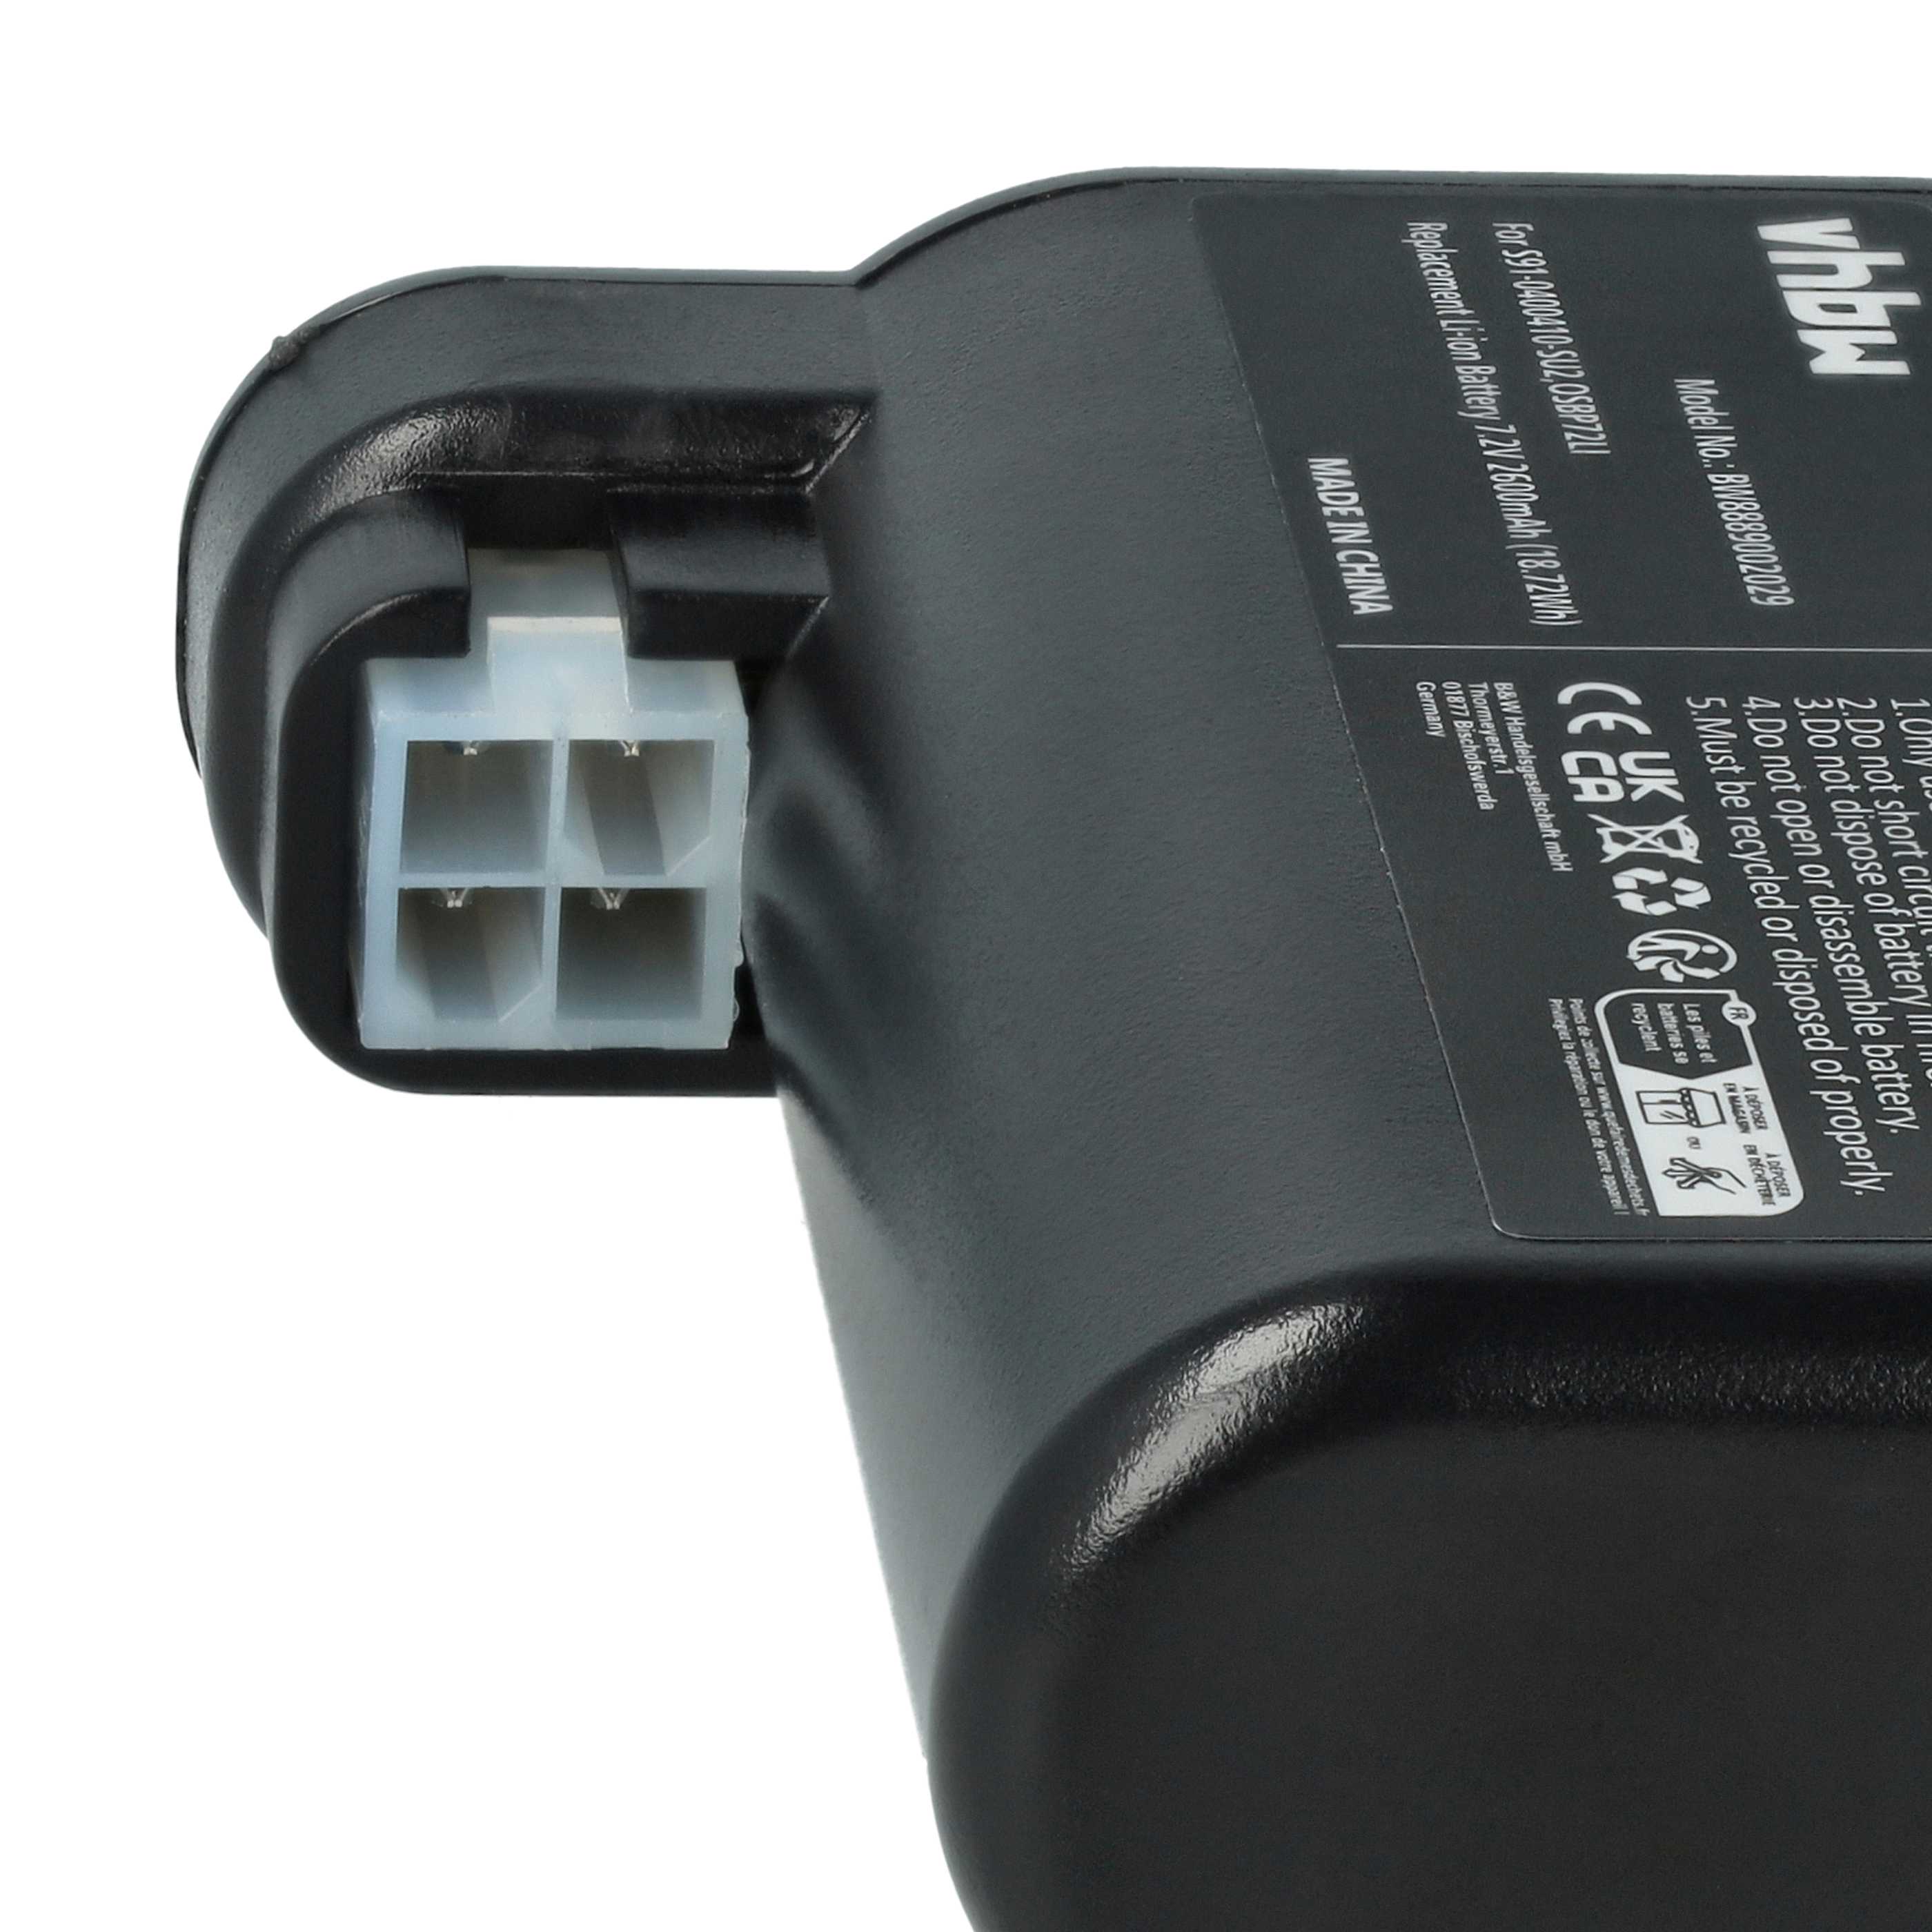 Battery Replacement for AEG S91-0400410-SU2, OSBP72LI for - 2600mAh, 7.2V, Li-Ion